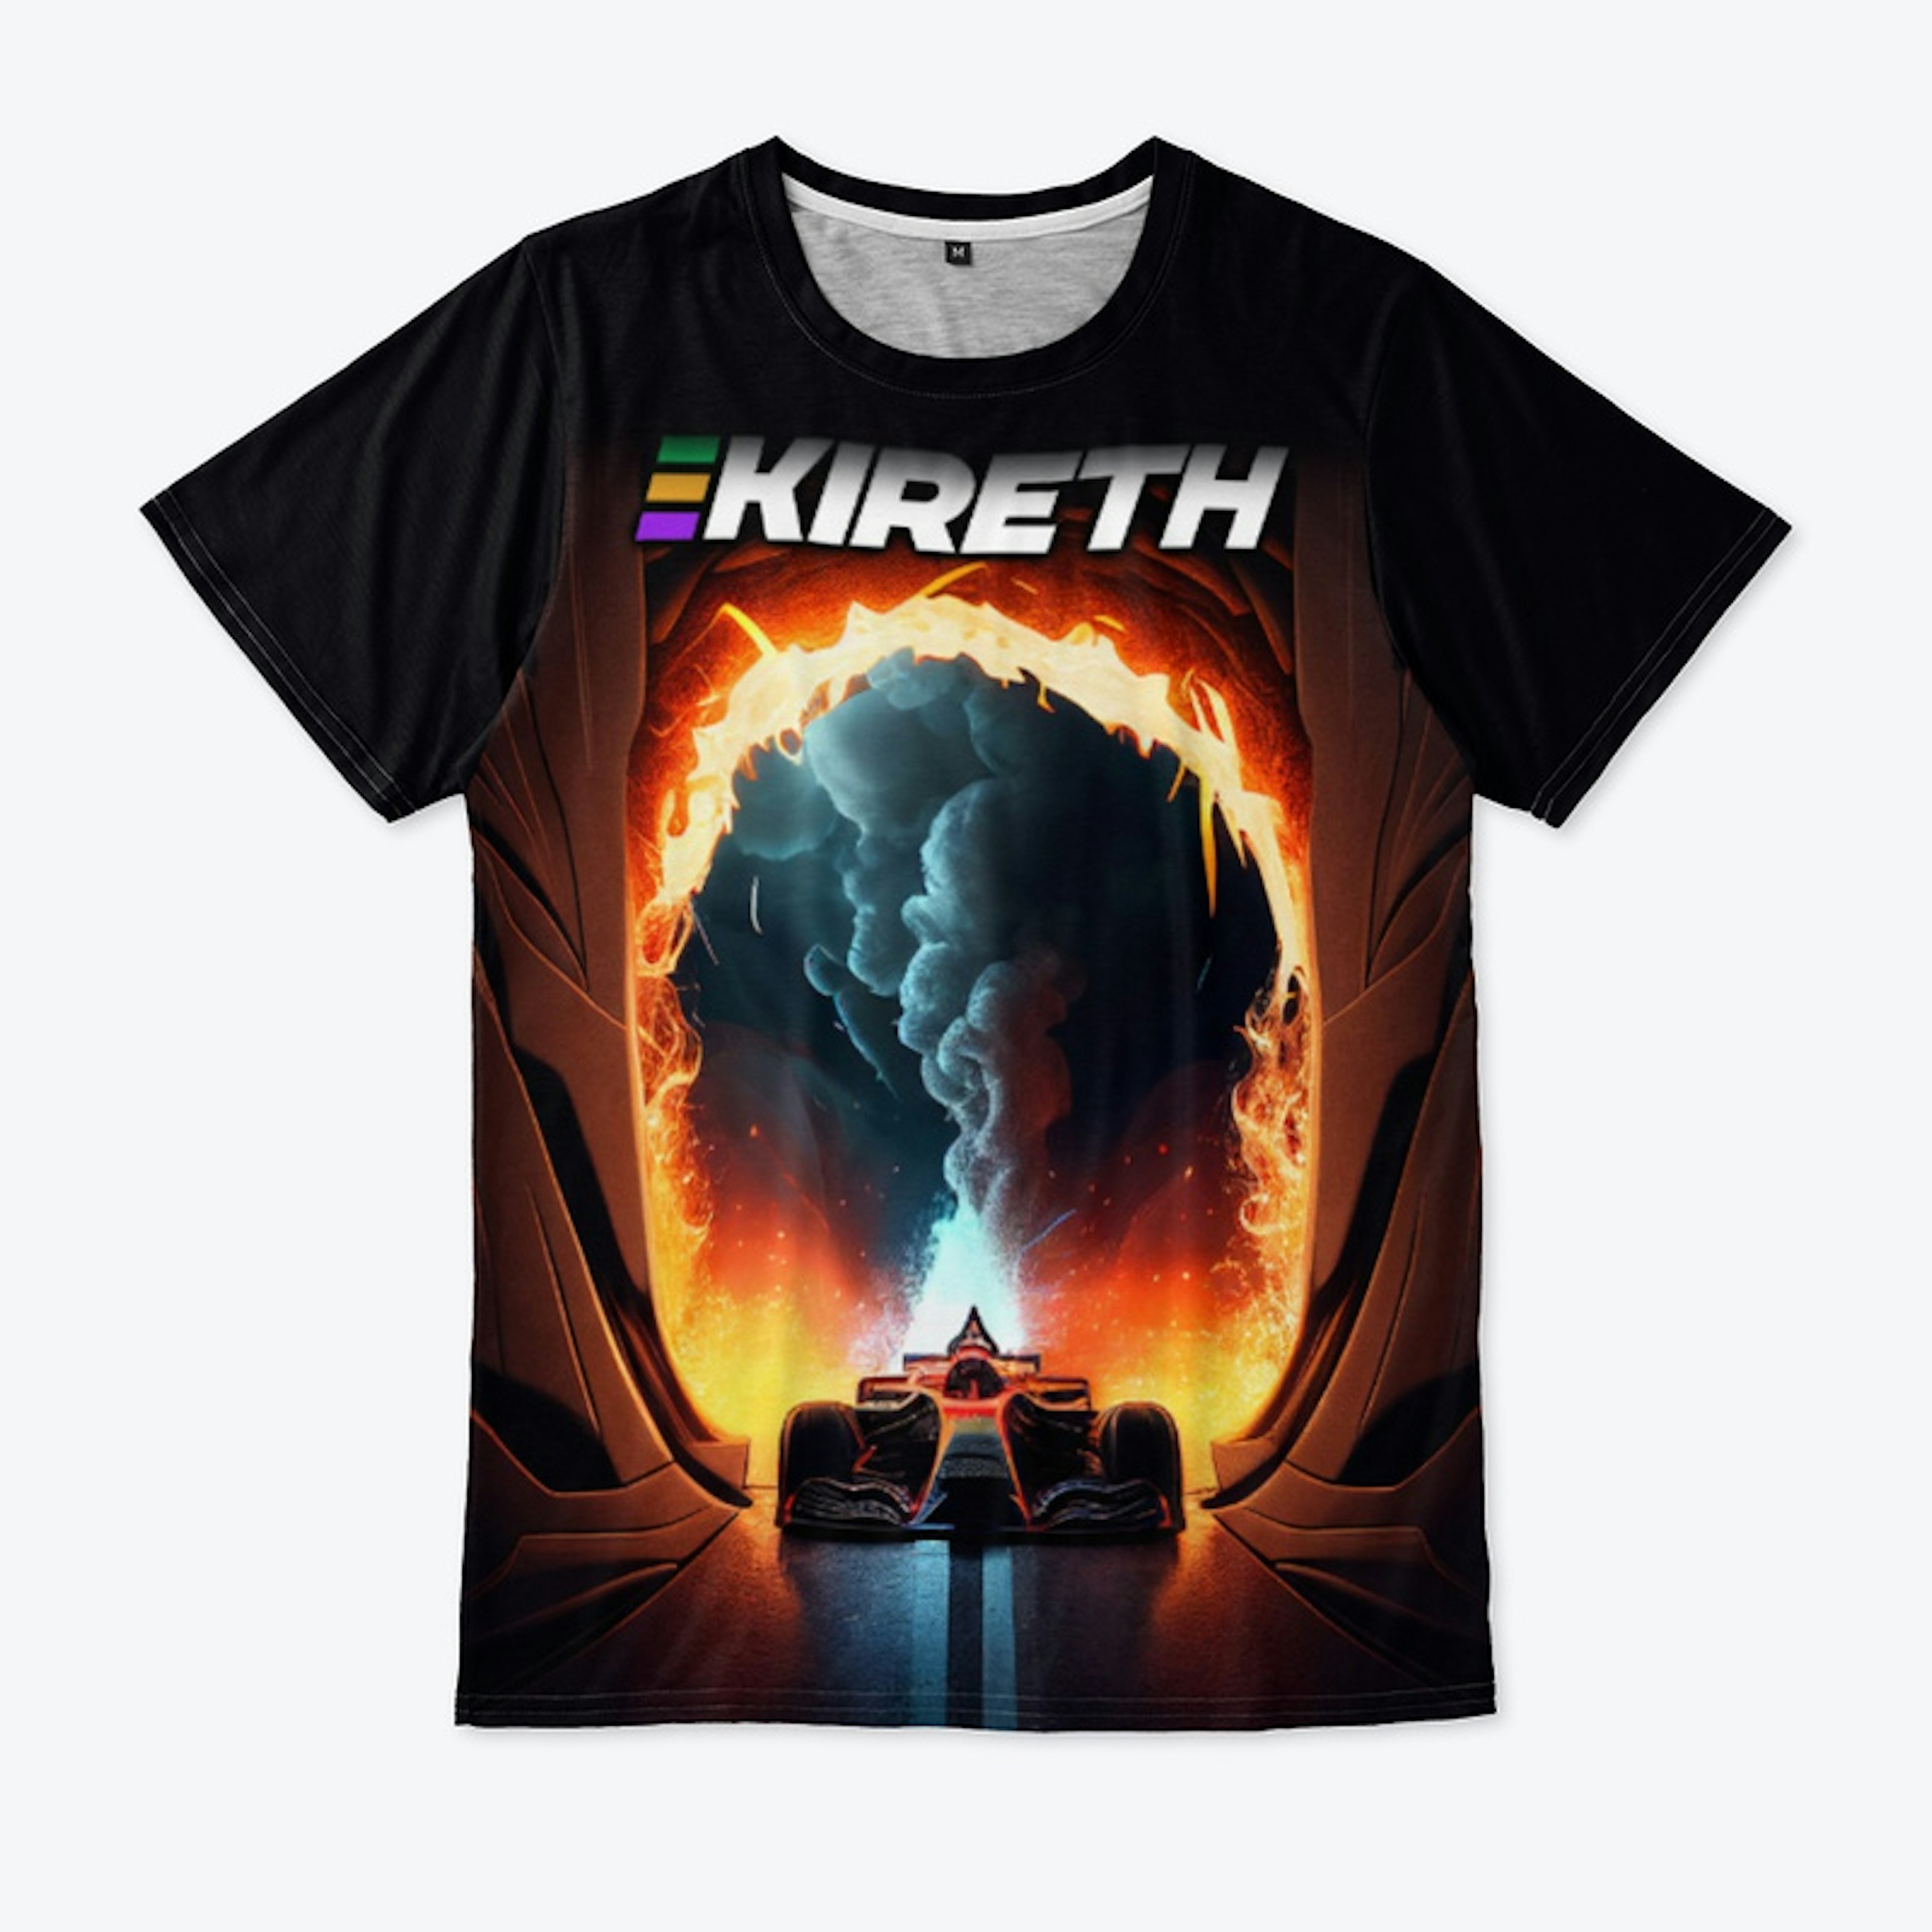 Kireth Firetunnel T-shirt